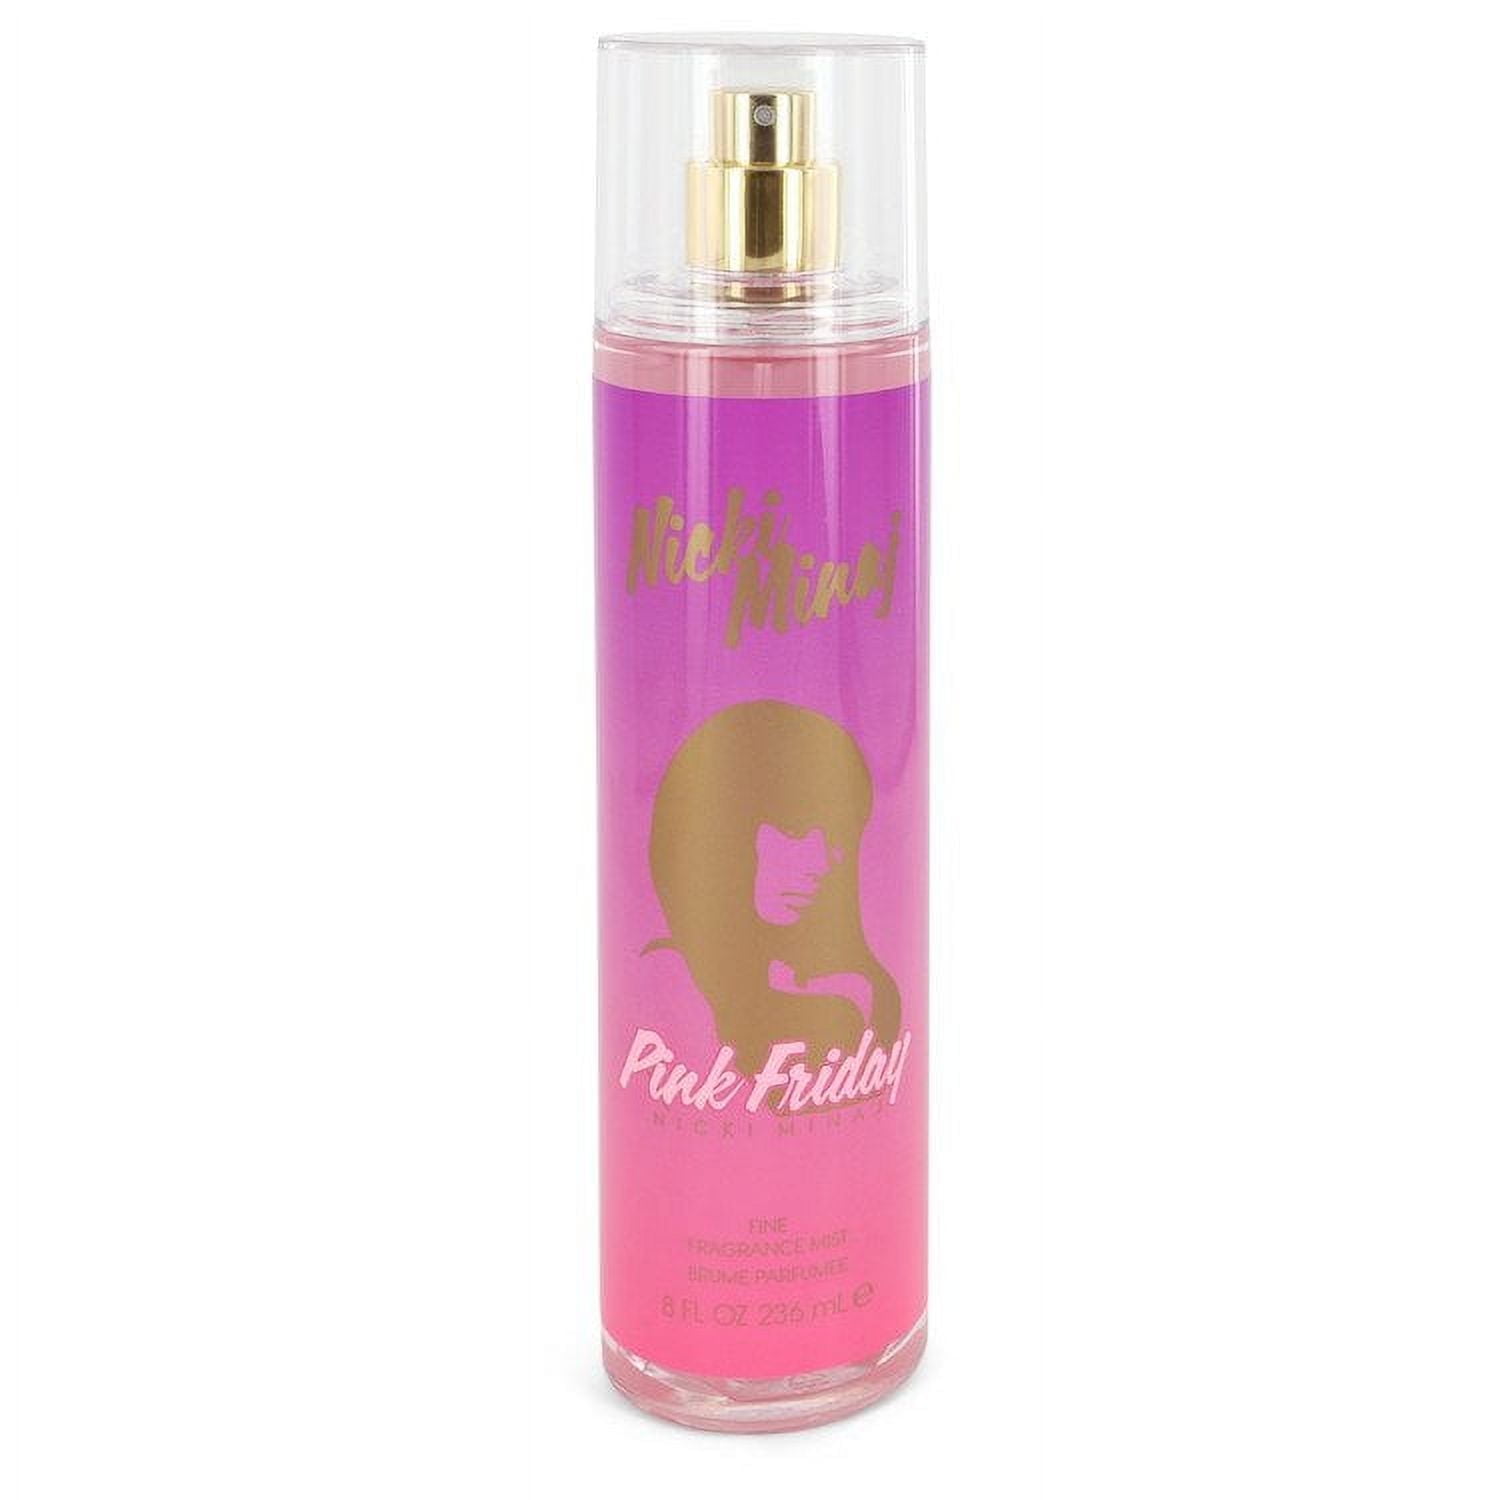 Pink Friday by Nicki Minaj Body Mist Spray 8 oz For Women - image 1 of 1